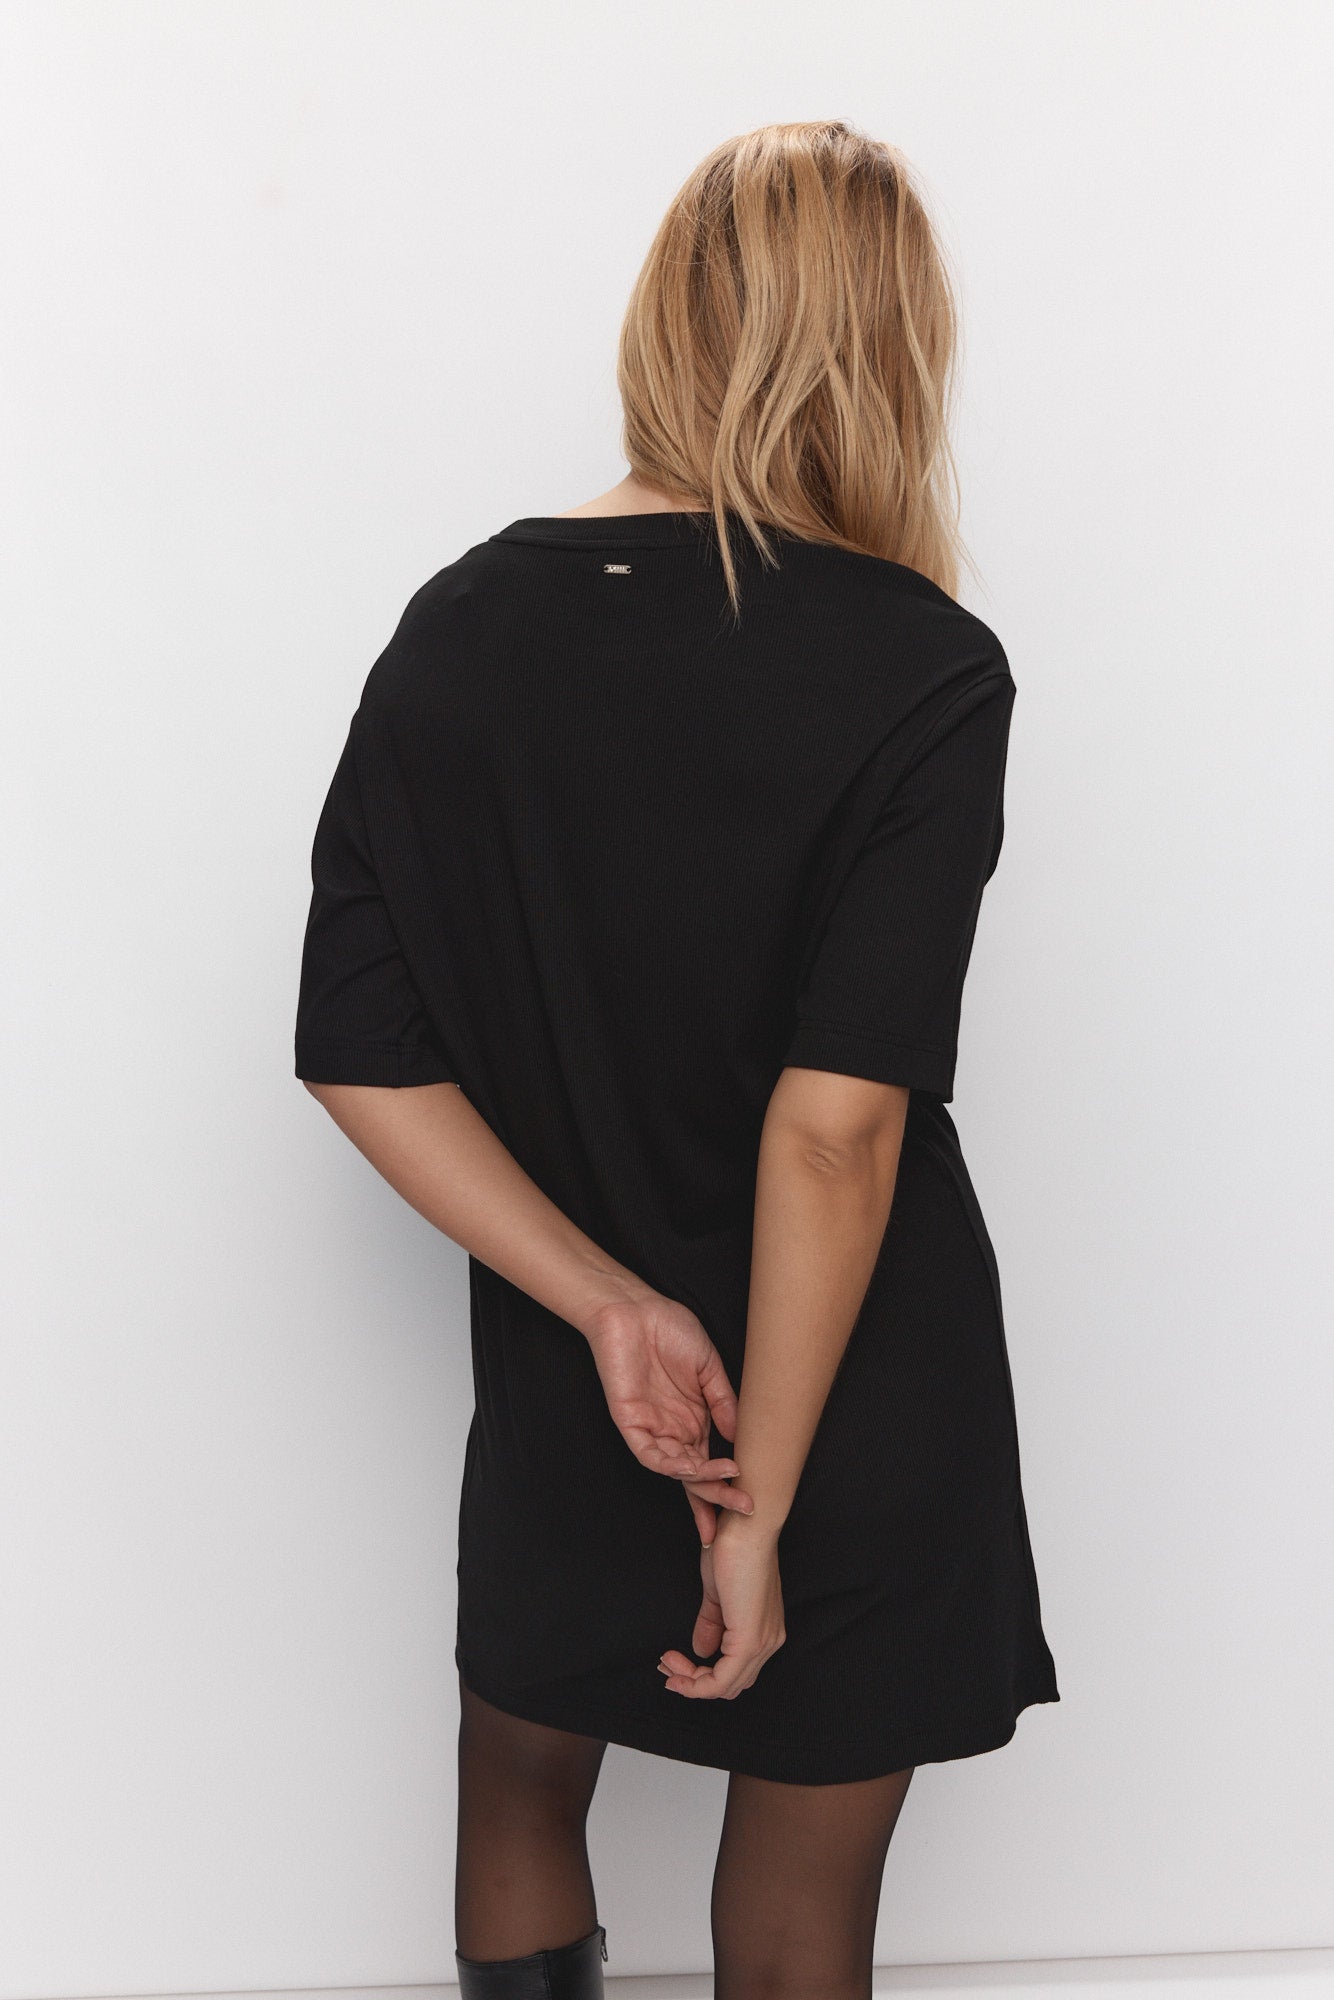 Loose black t-shirt dress | Kara